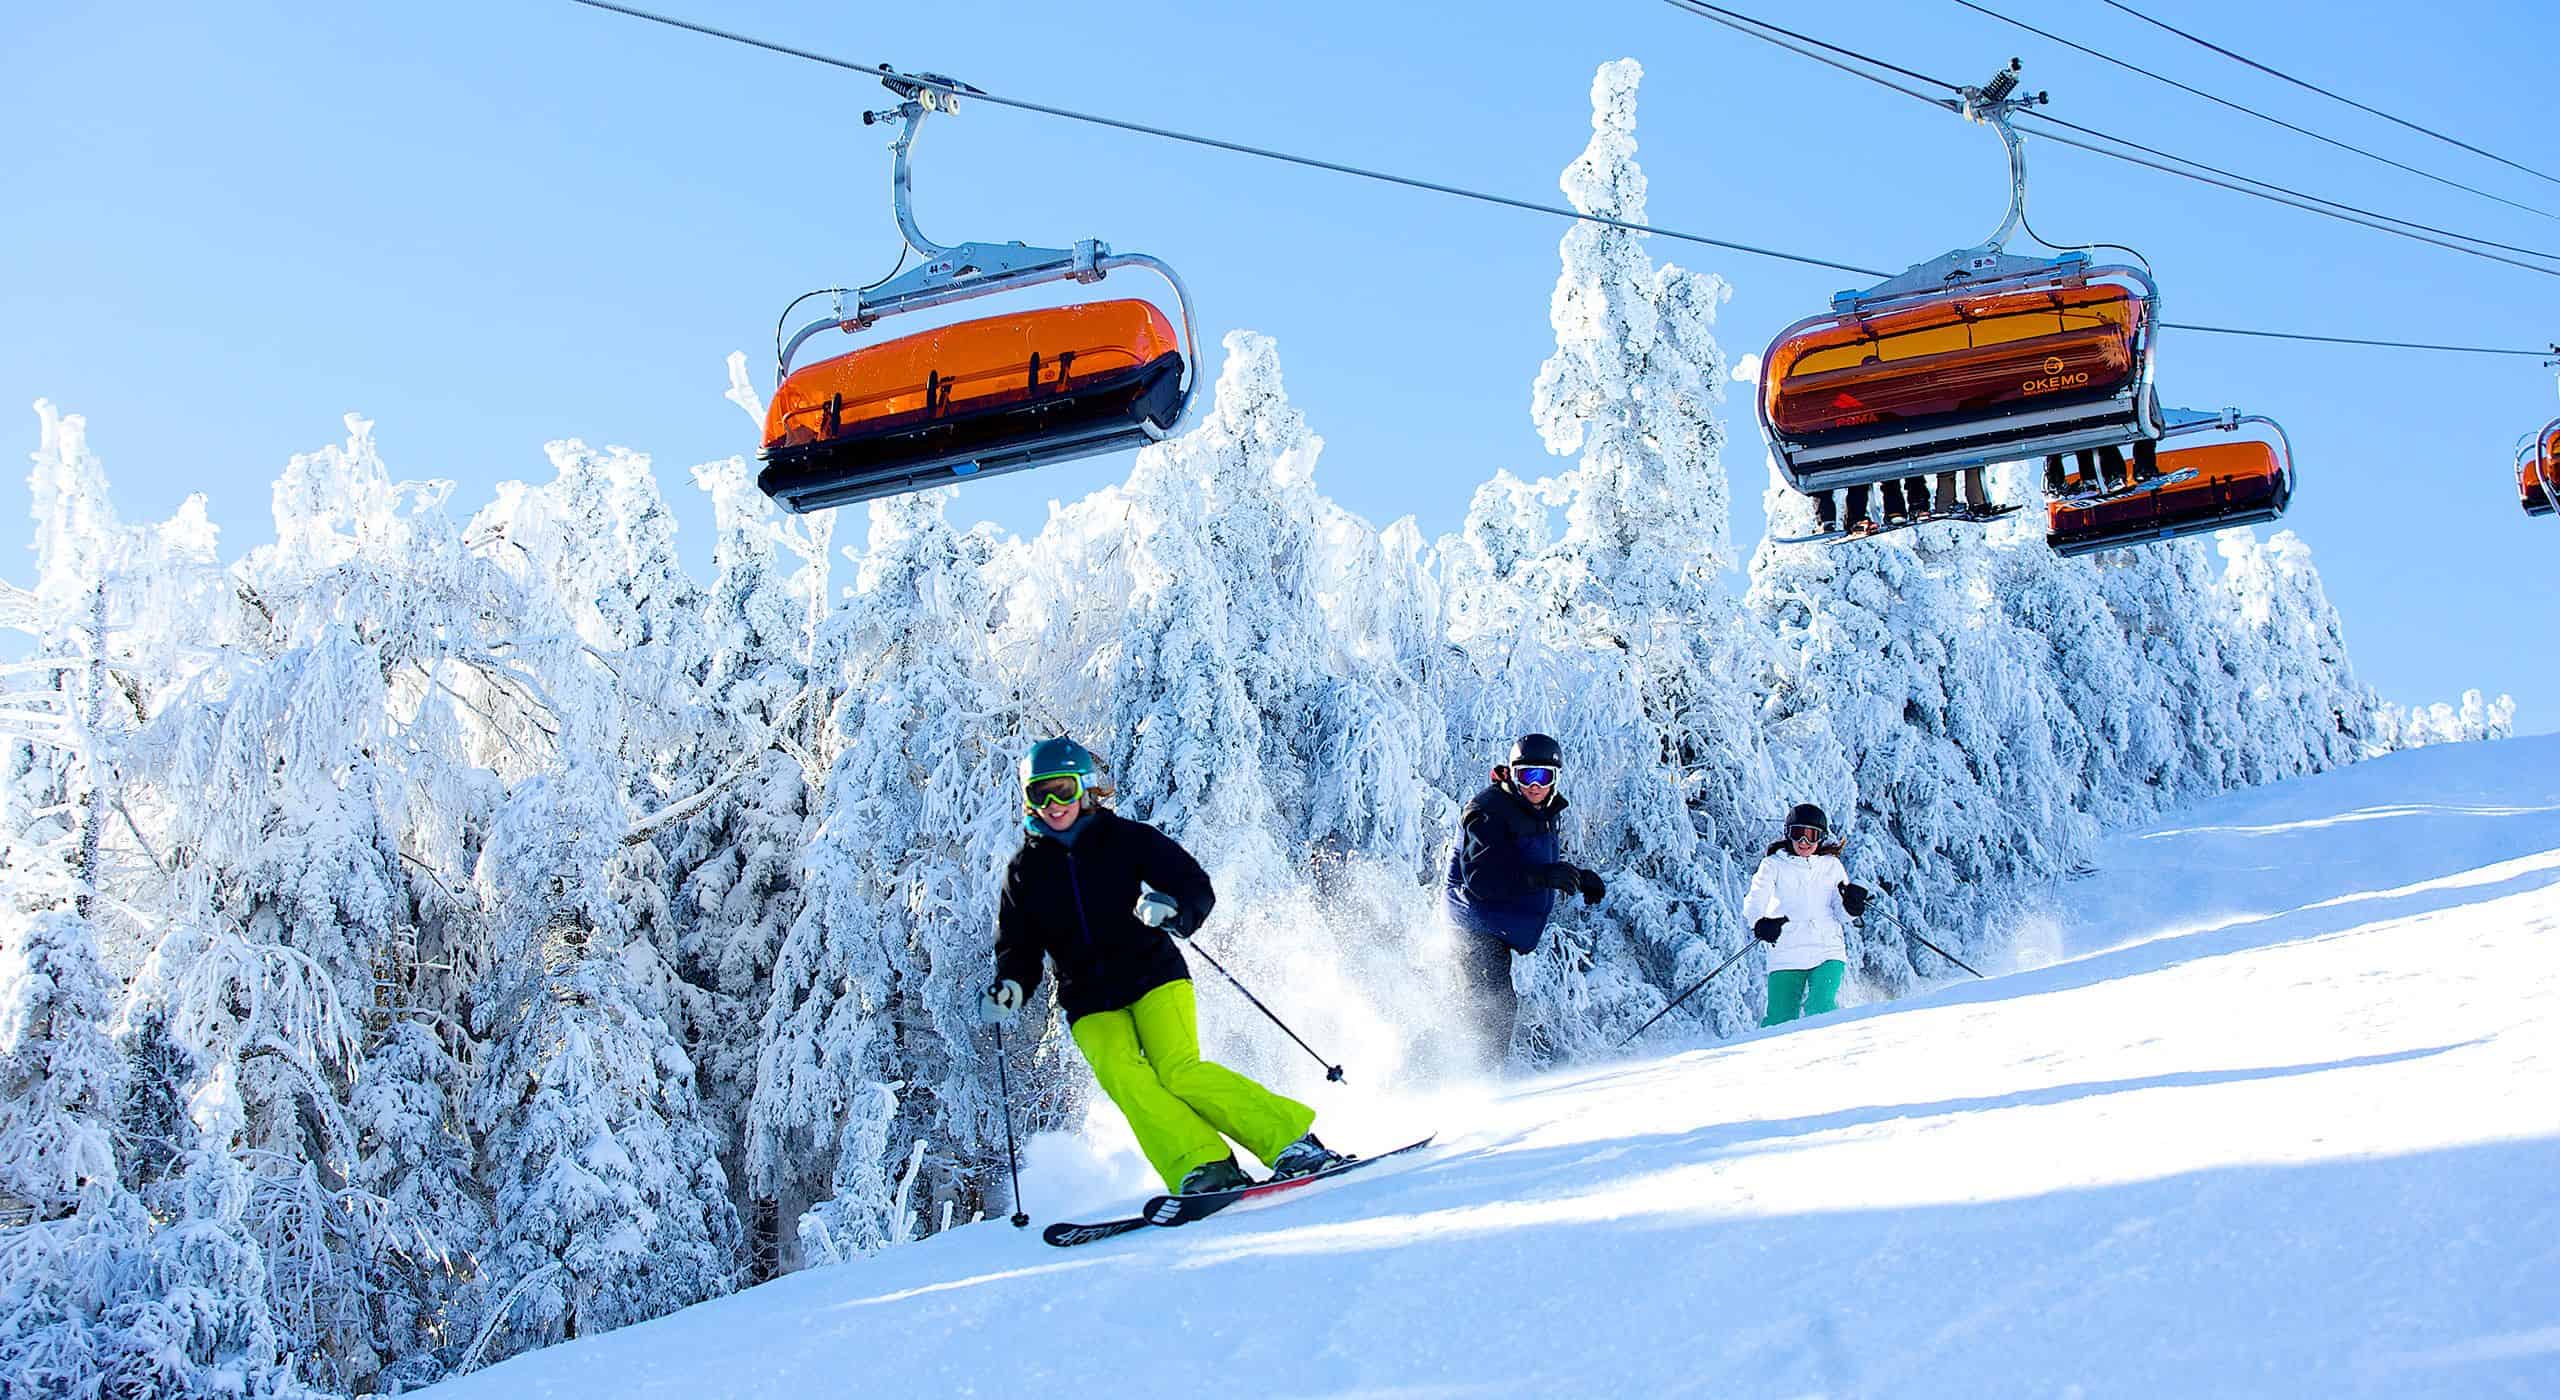 Okemo Ski Slopes and Chair Lift